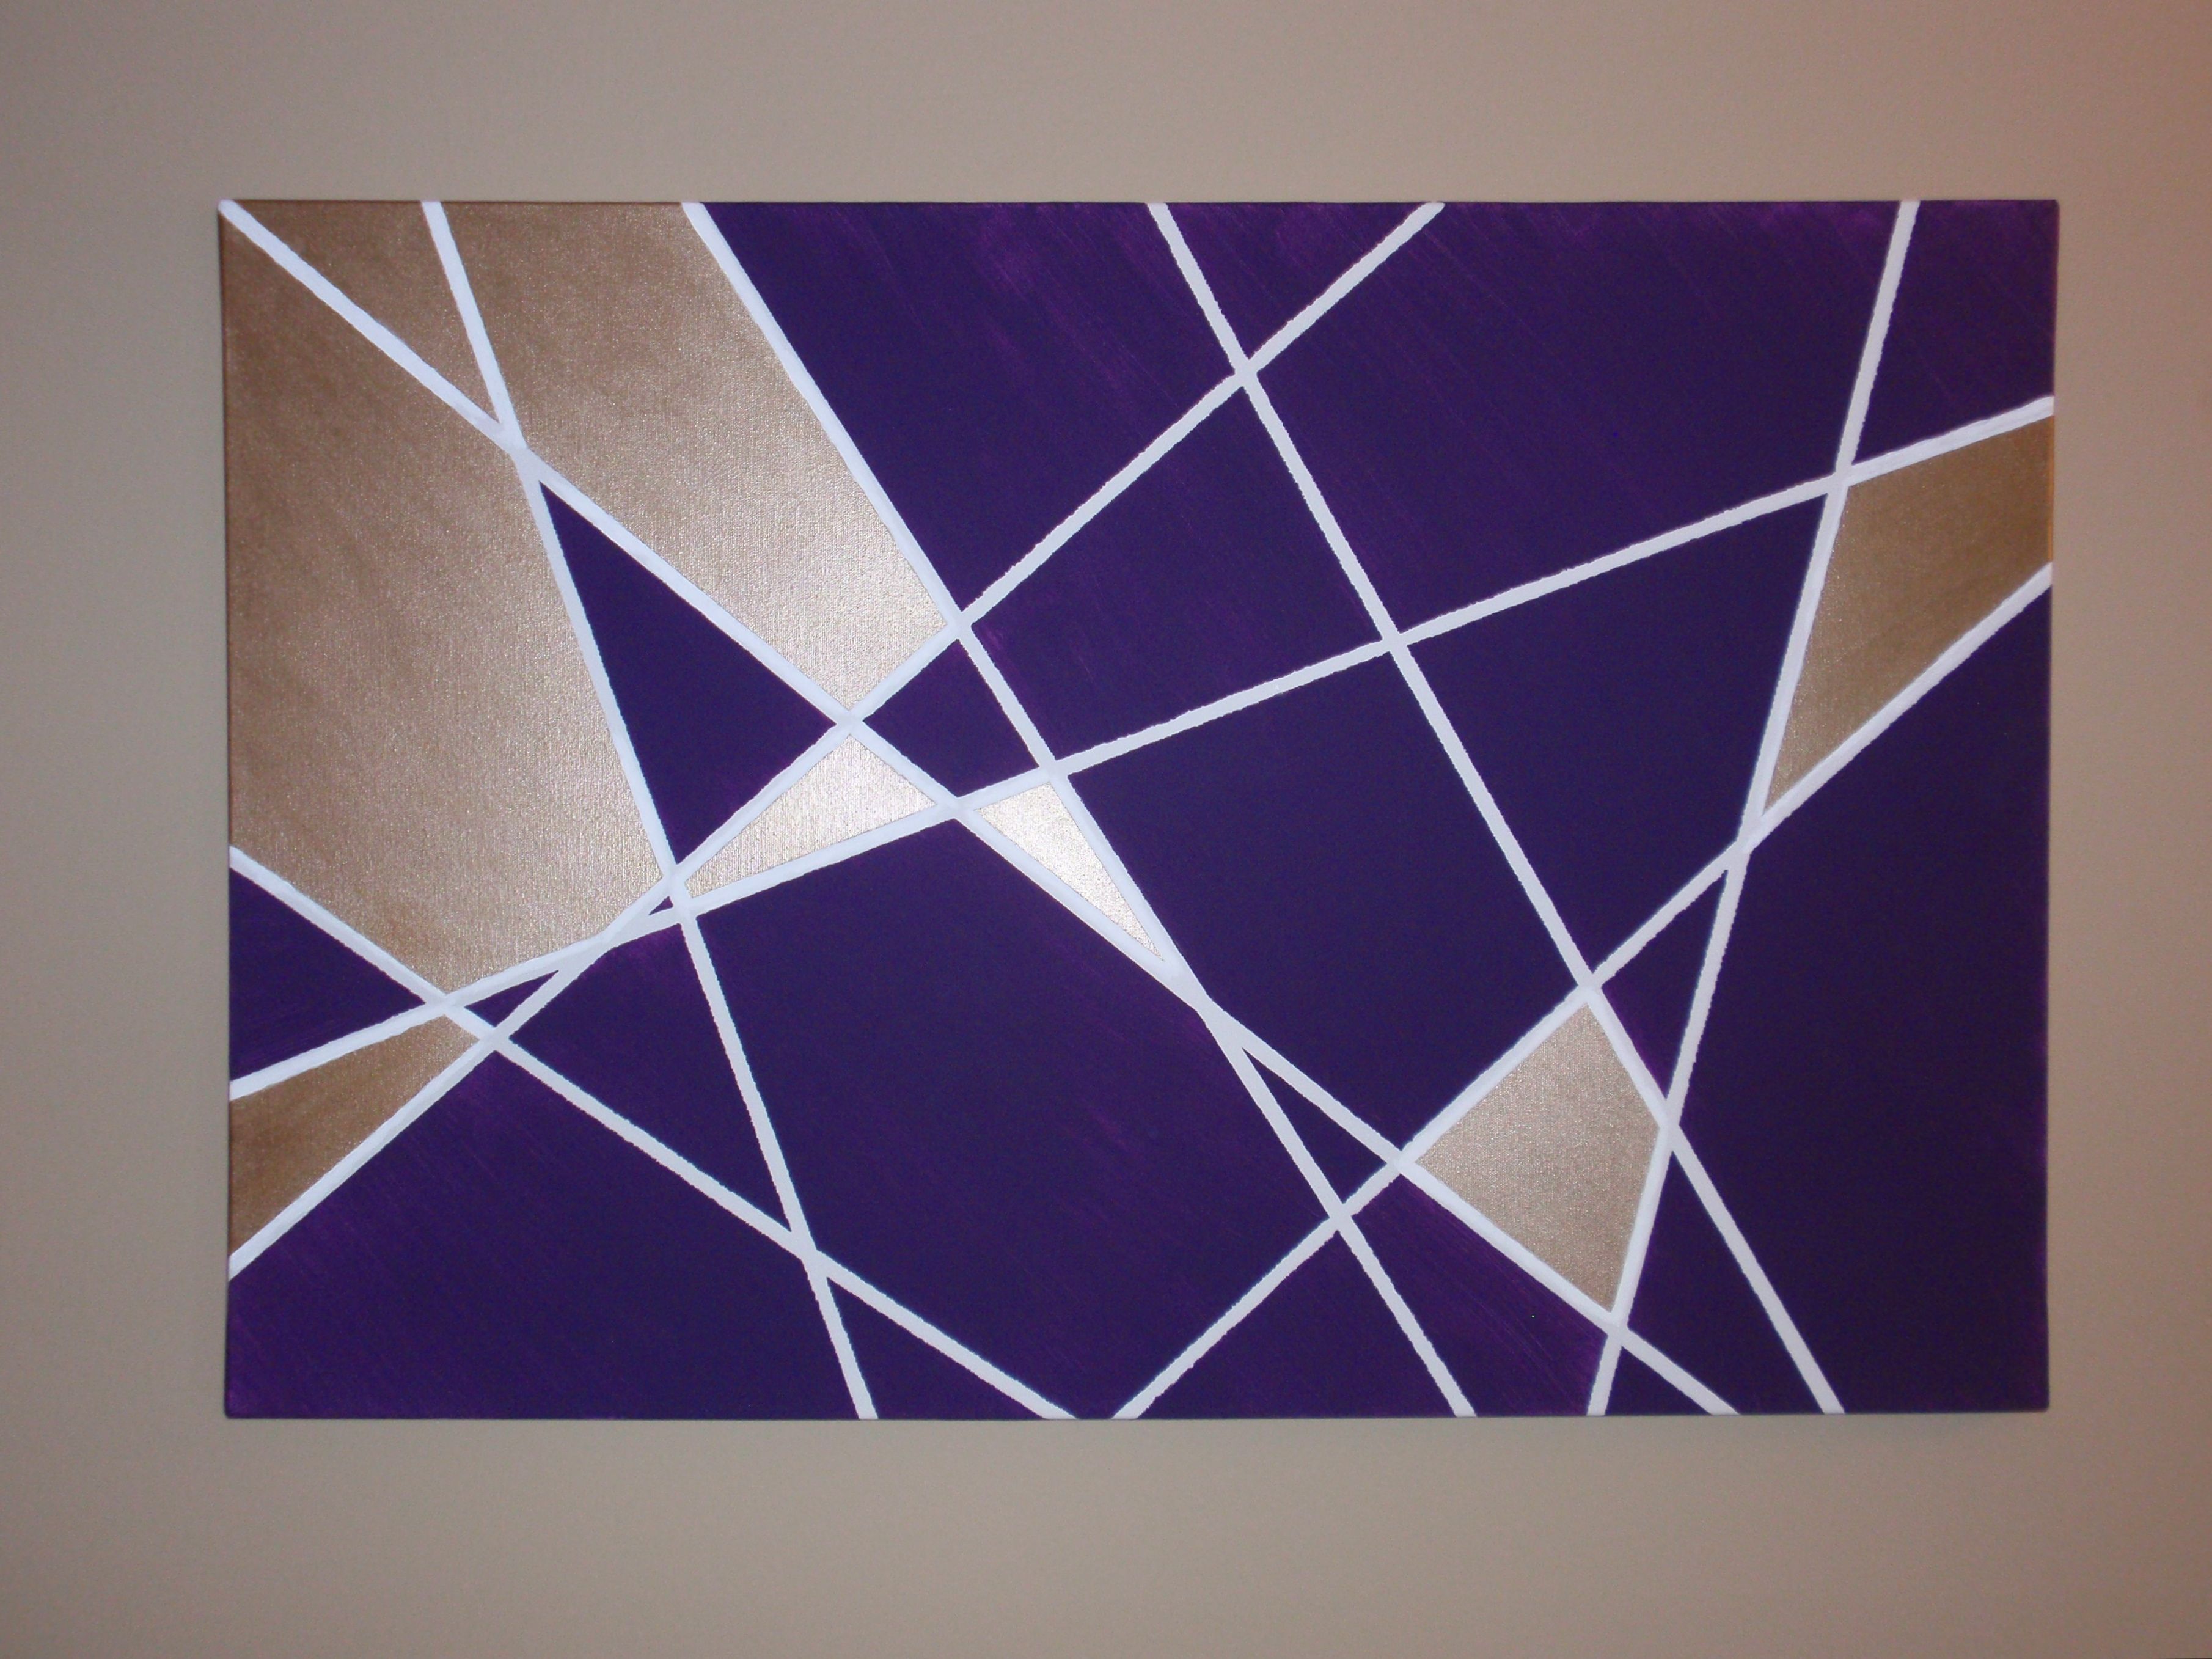 Geometric Wall Art Diy | Spring Board Of Ideas | Pinterest With Geometric Wall Art (Photo 3 of 20)